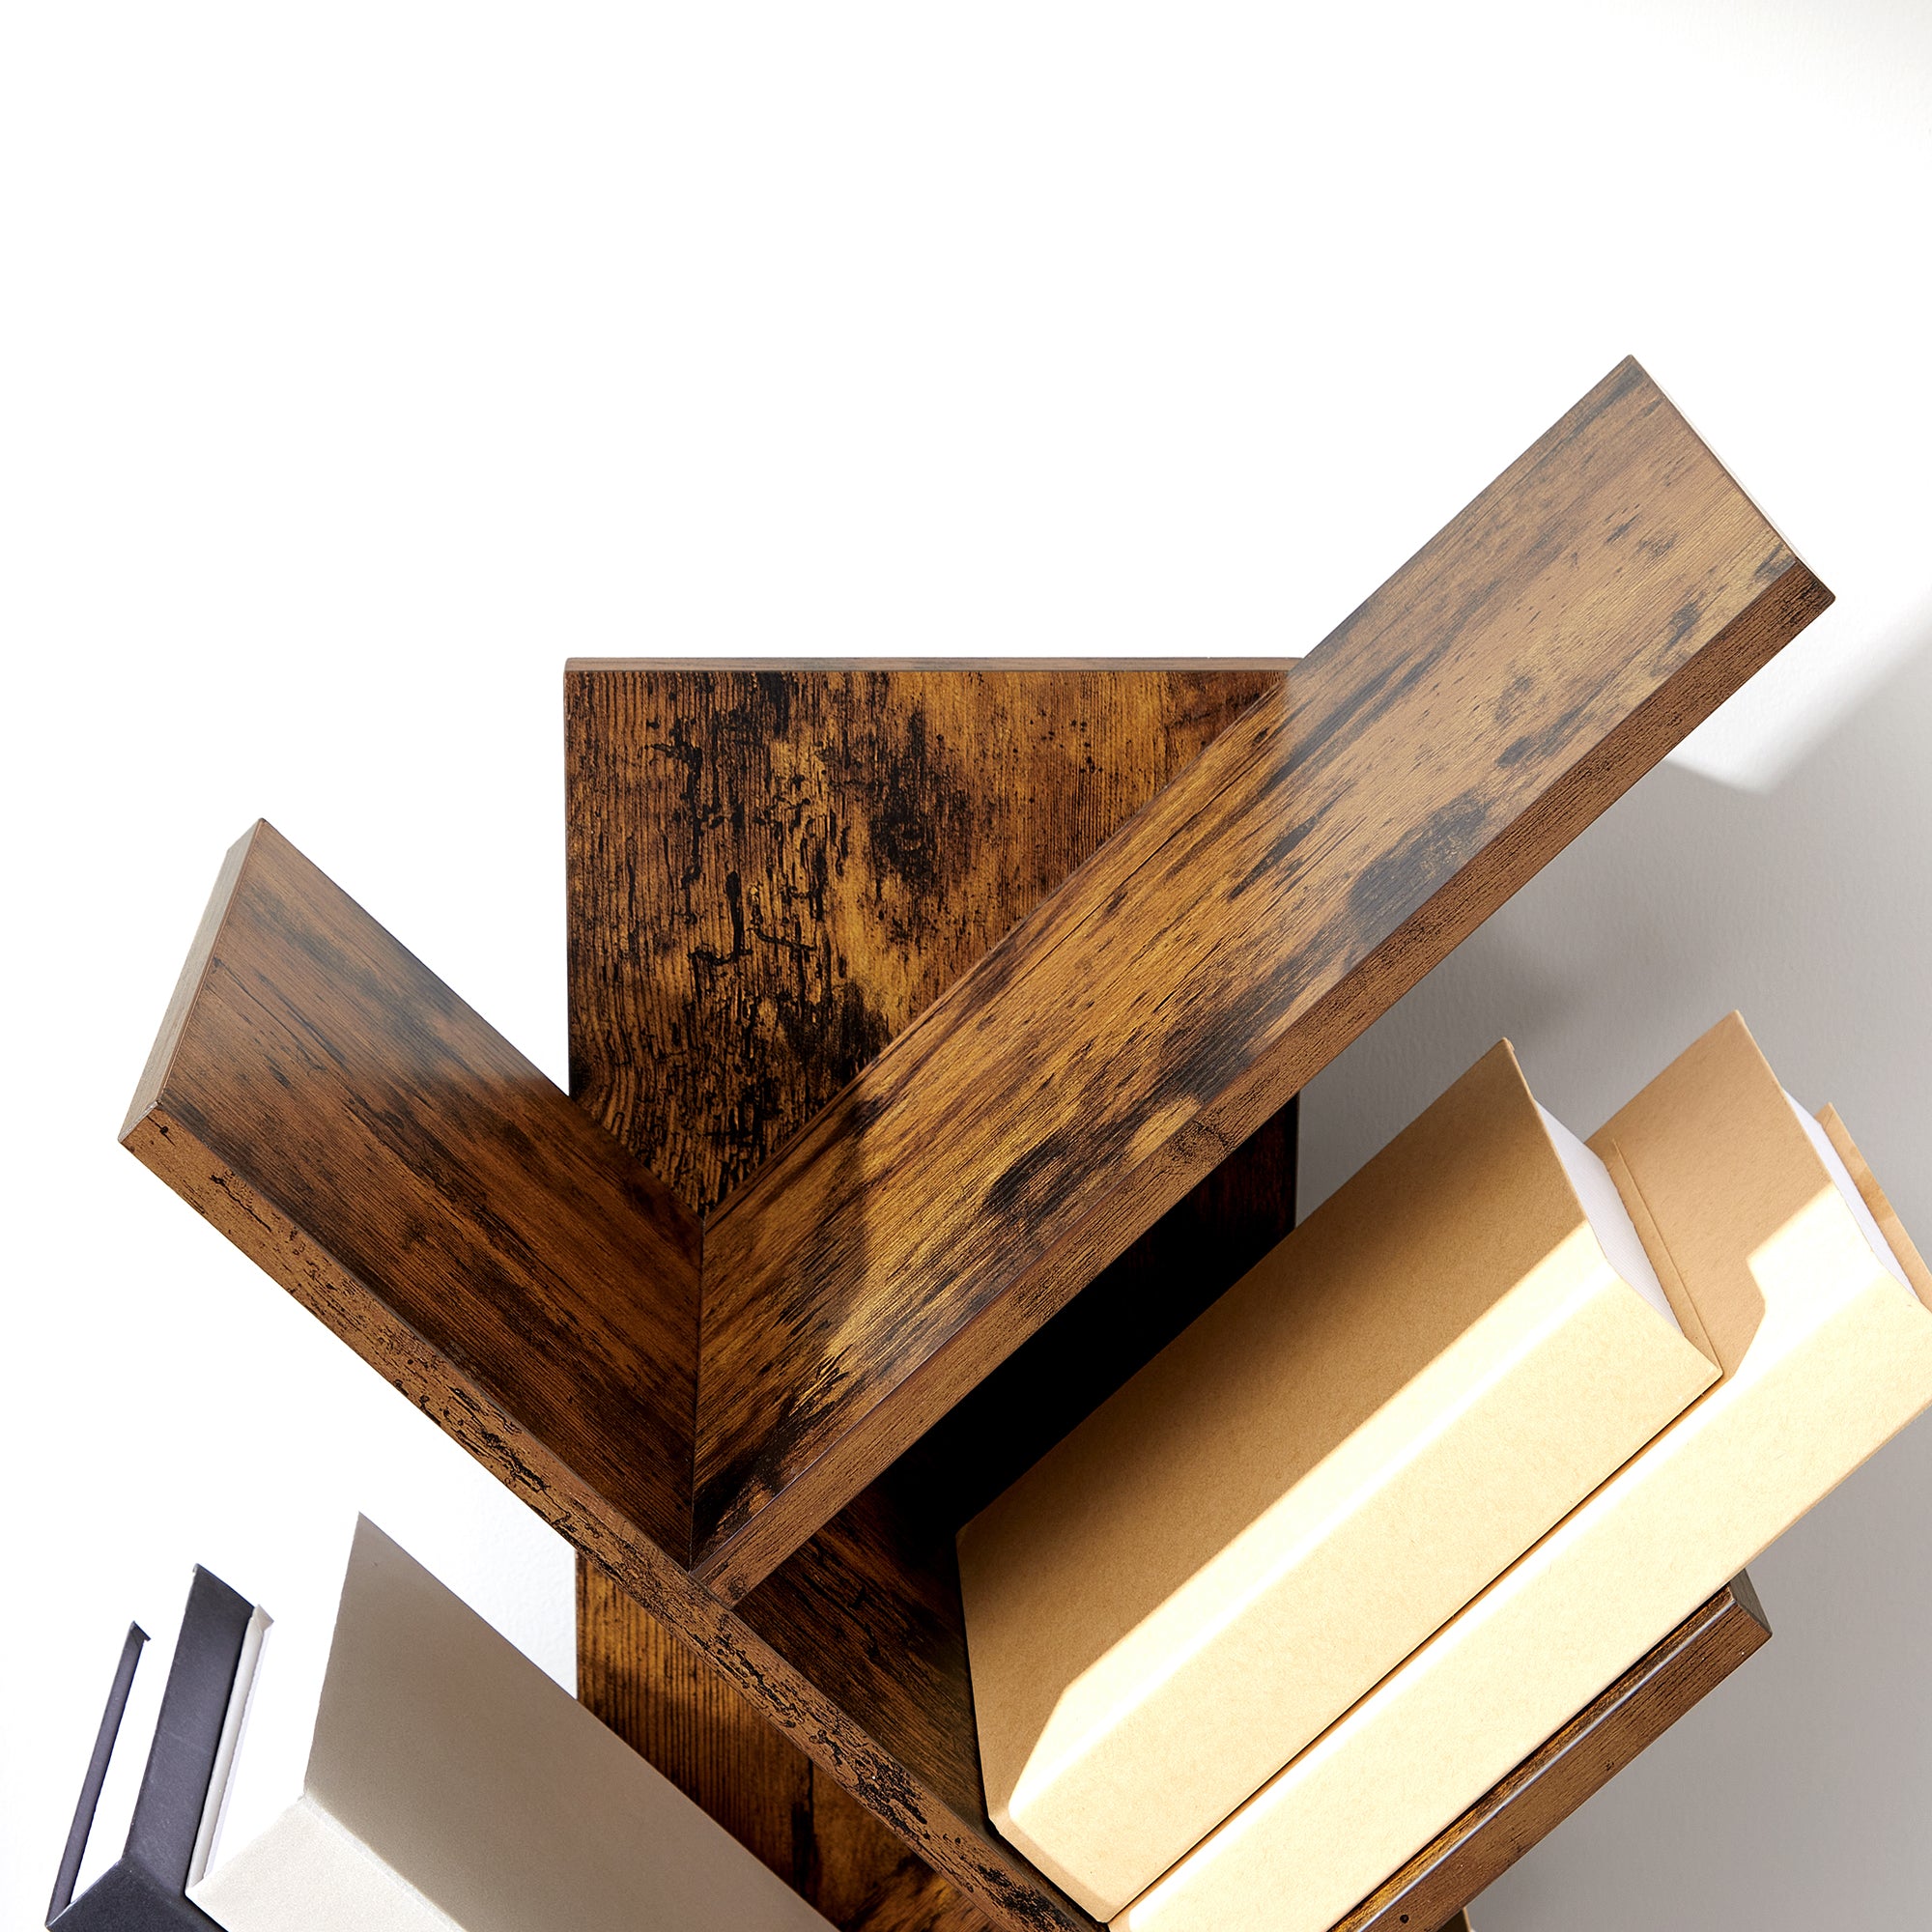 Bookshelves Display Unit Tree-Shaped - Brown